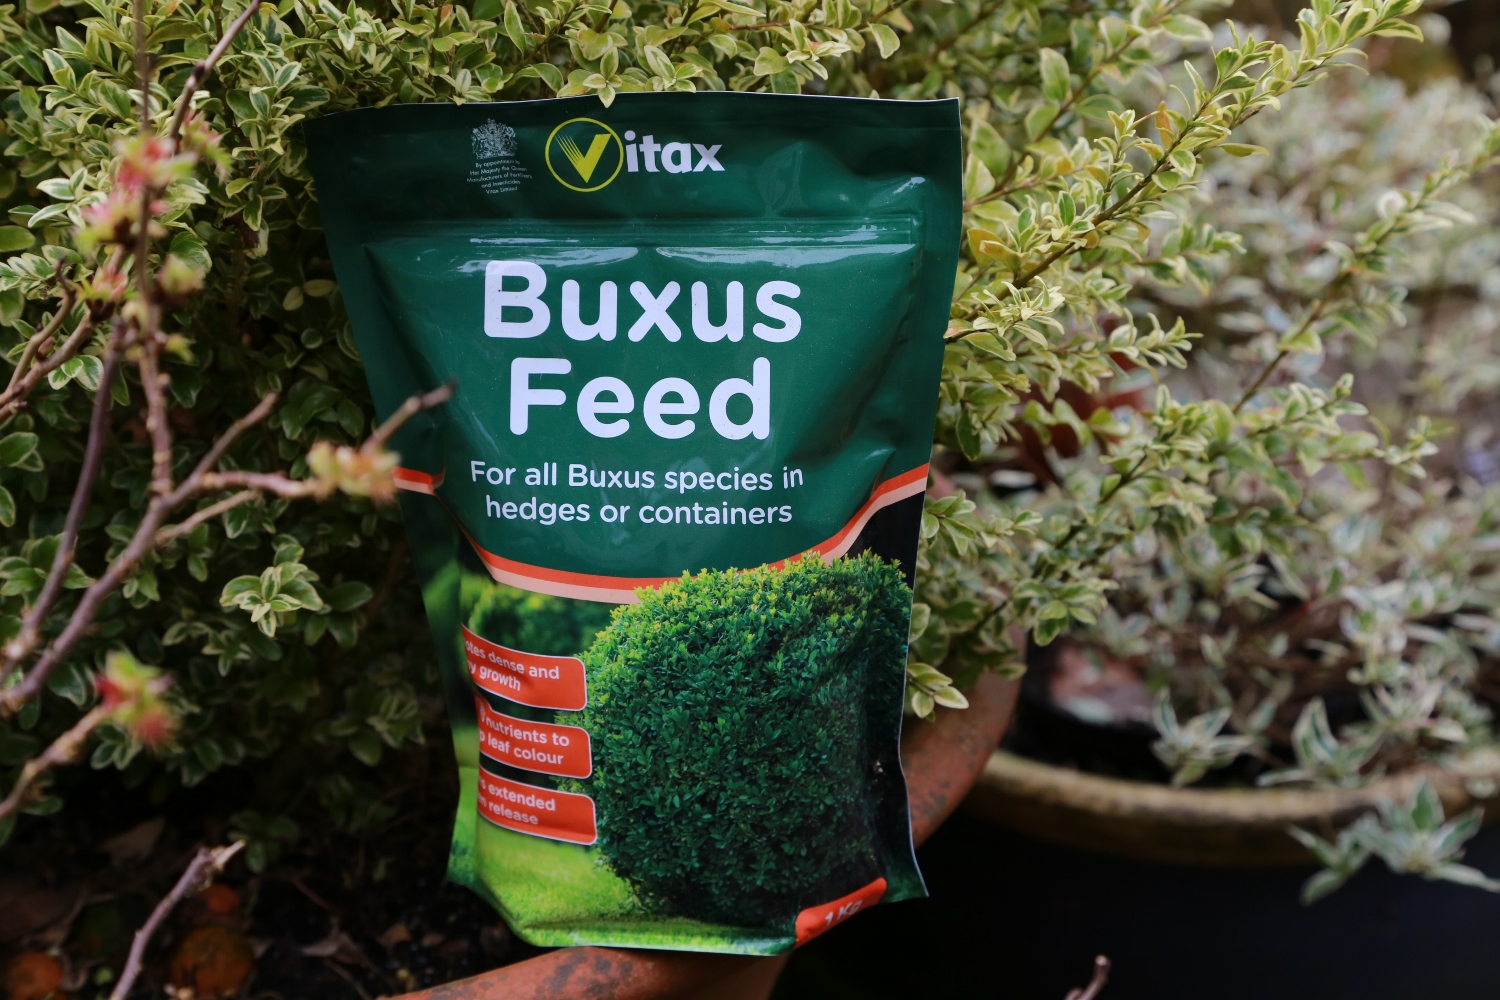 Vitax Buxus feed